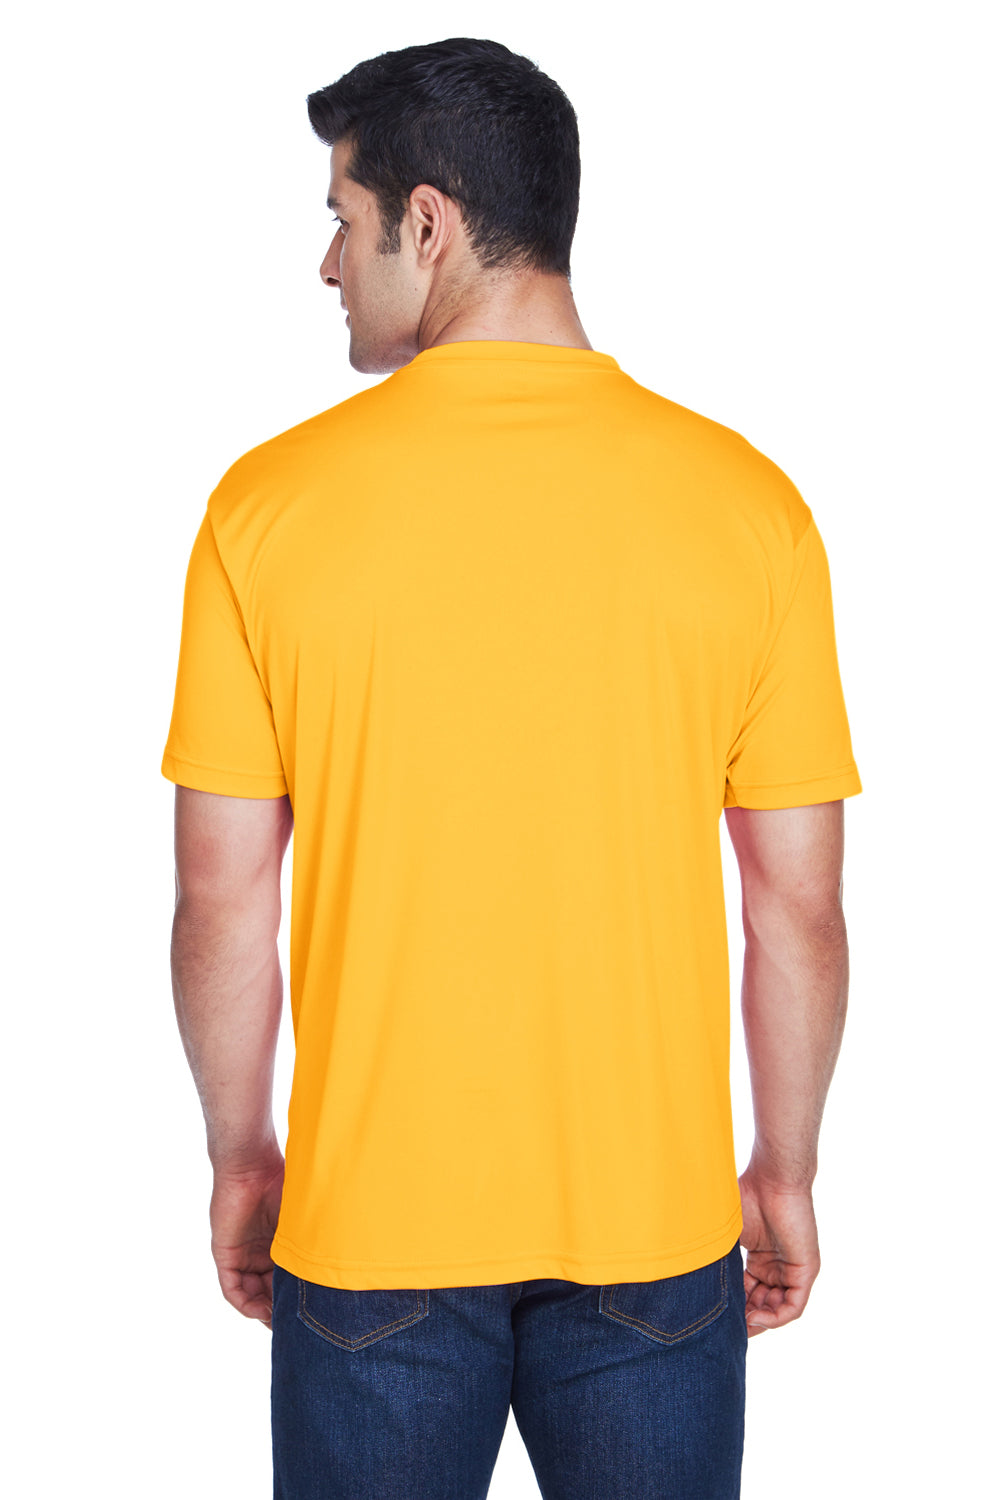 UltraClub 8420 Mens Cool & Dry Performance Moisture Wicking Short Sleeve Crewneck T-Shirt Gold Back